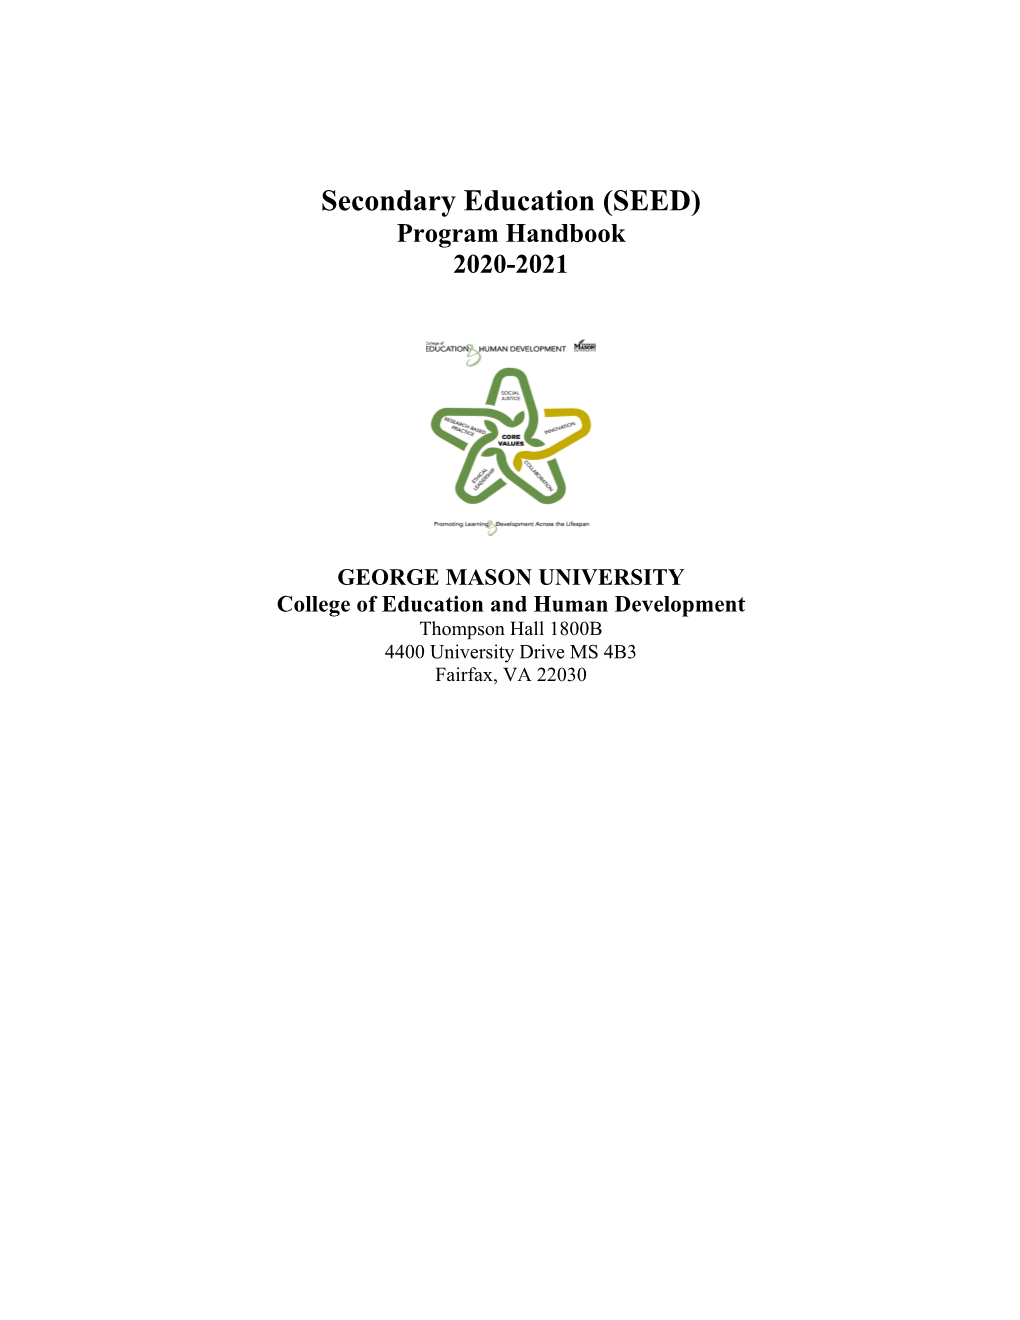 Secondary Education (SEED) Program Handbook 2020-2021